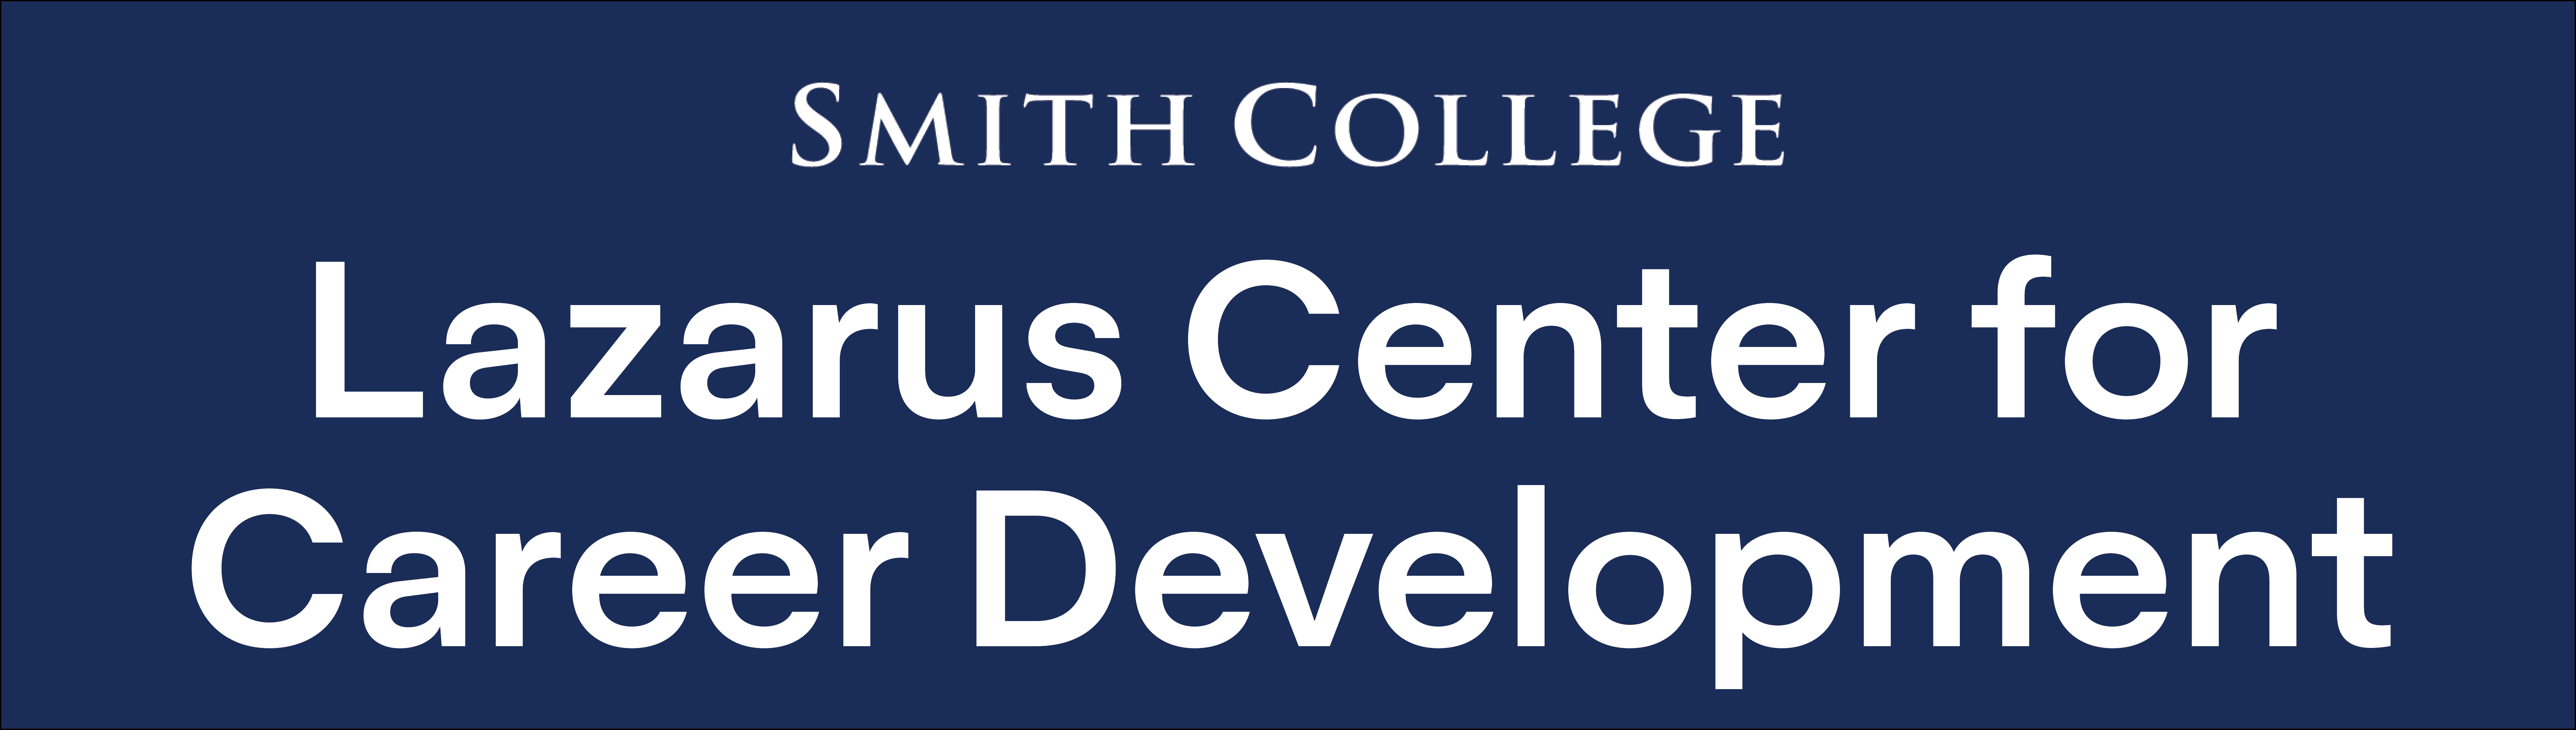 Smith College Lazarus Center for Career Development